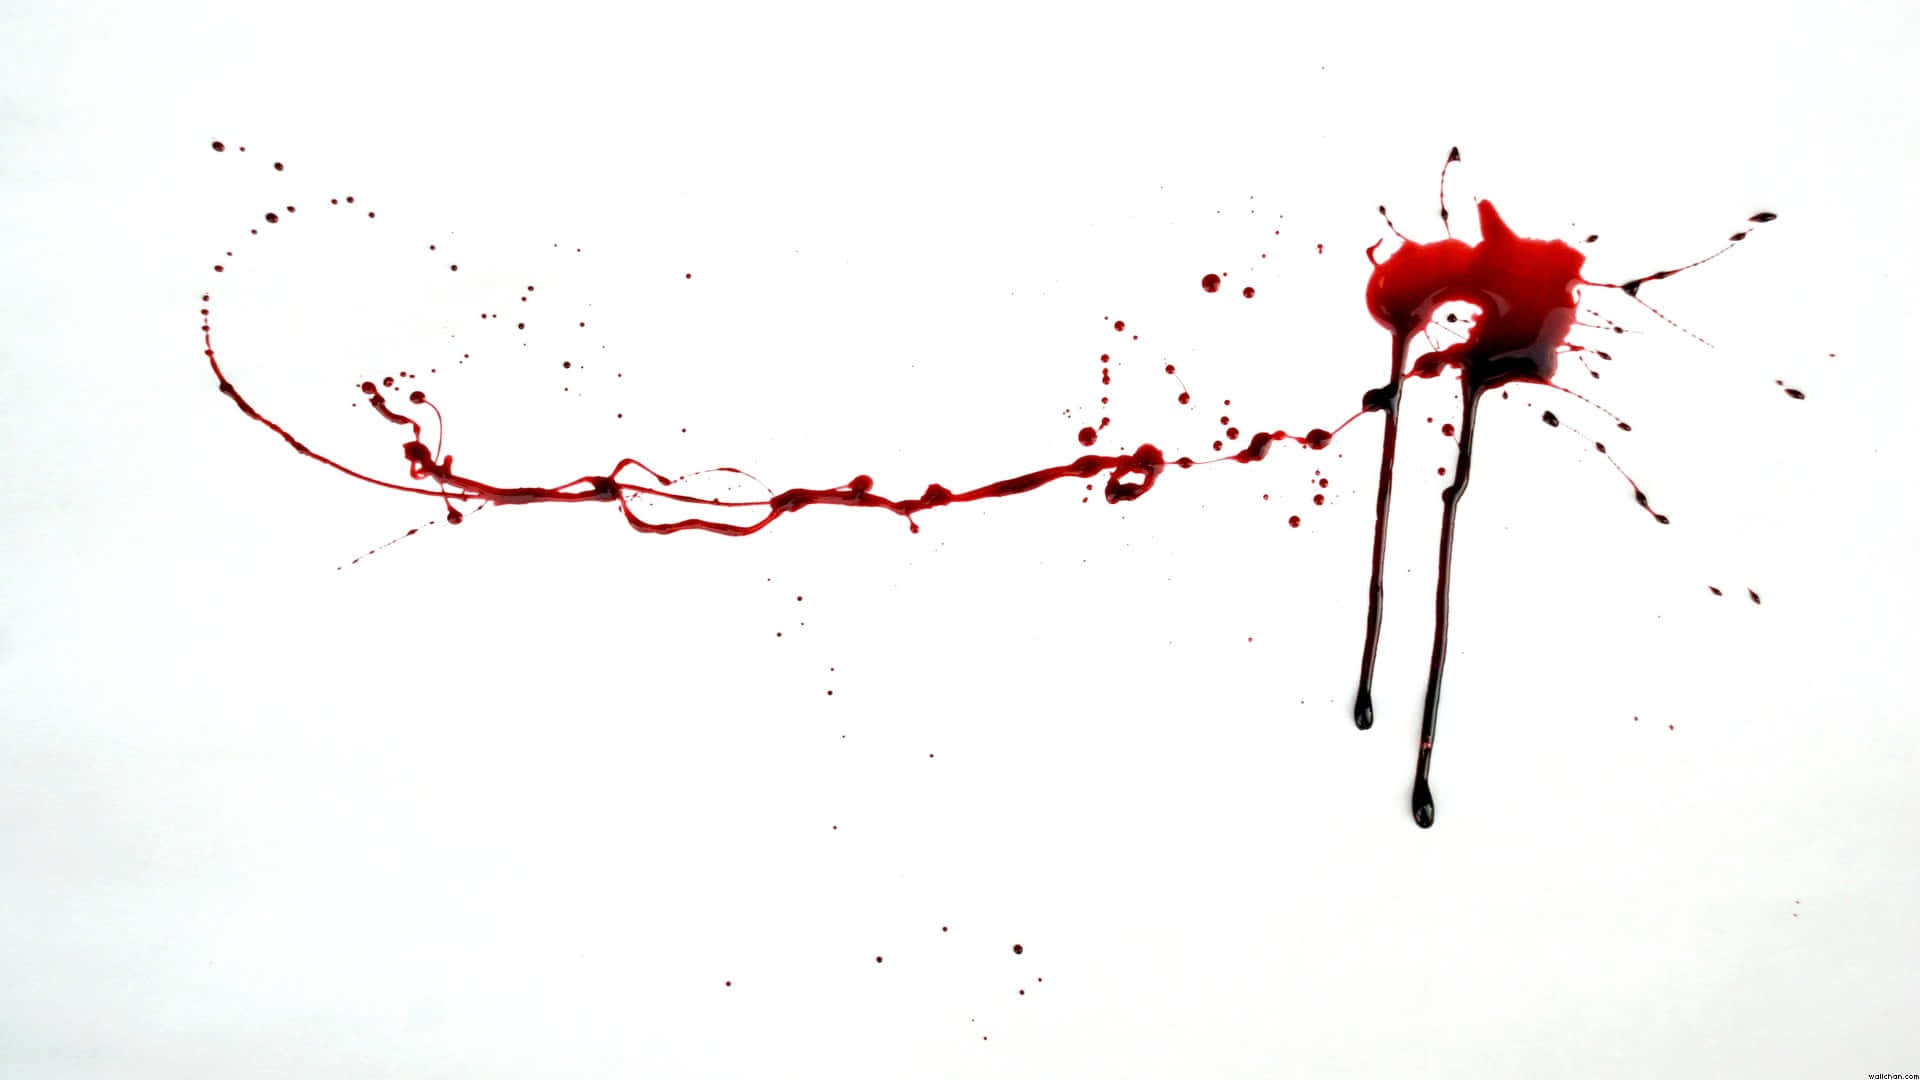 Dripping Effect Blood Splatter Landscape Background